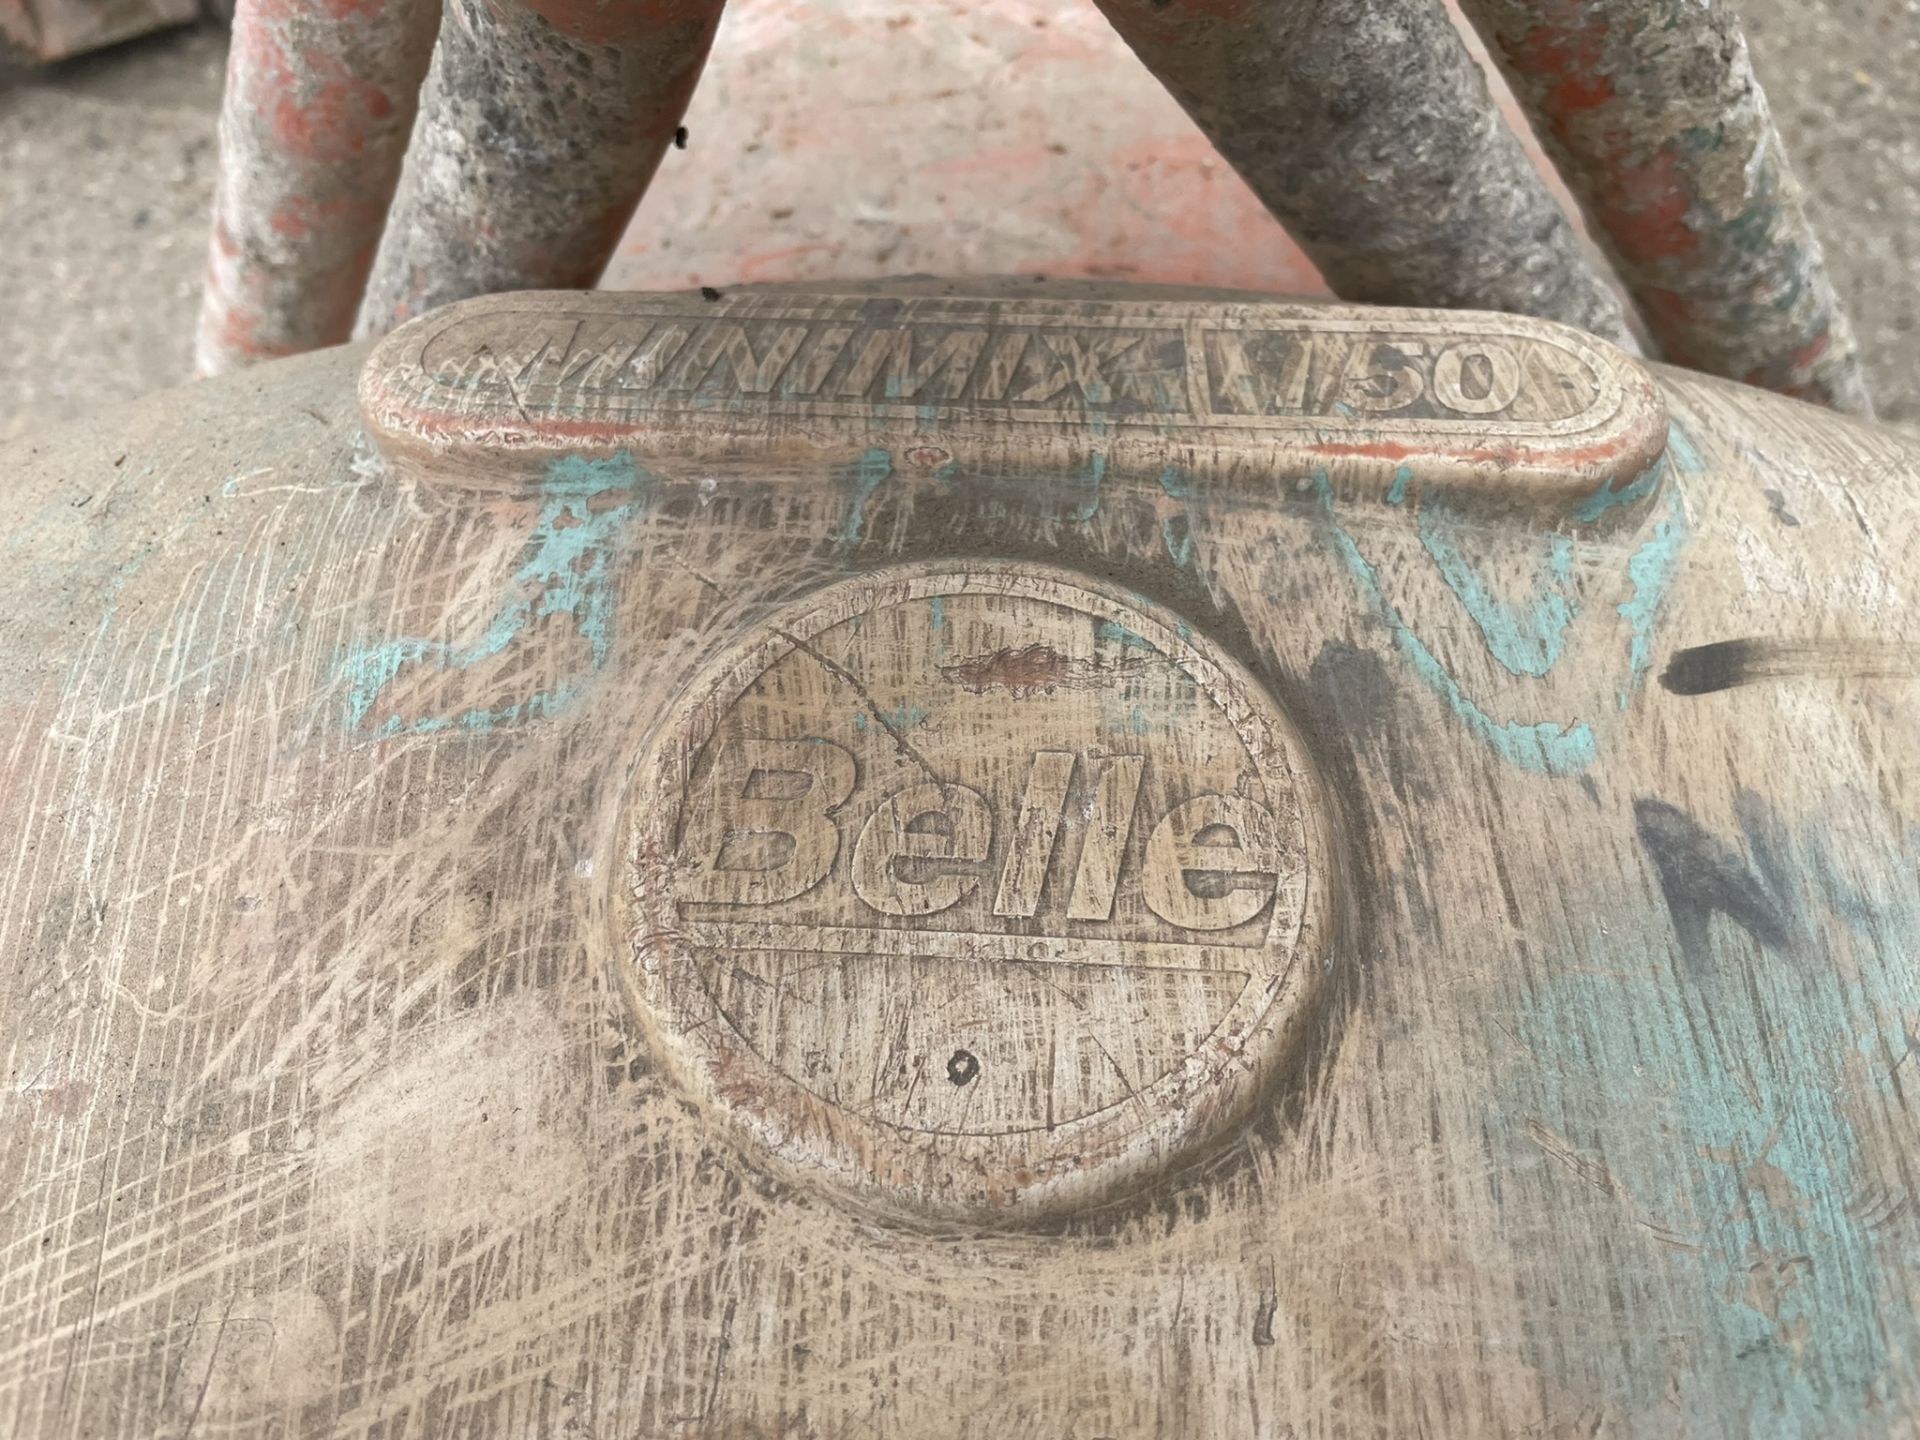 Belle Minimix Electric Cement Mixer - Image 4 of 5